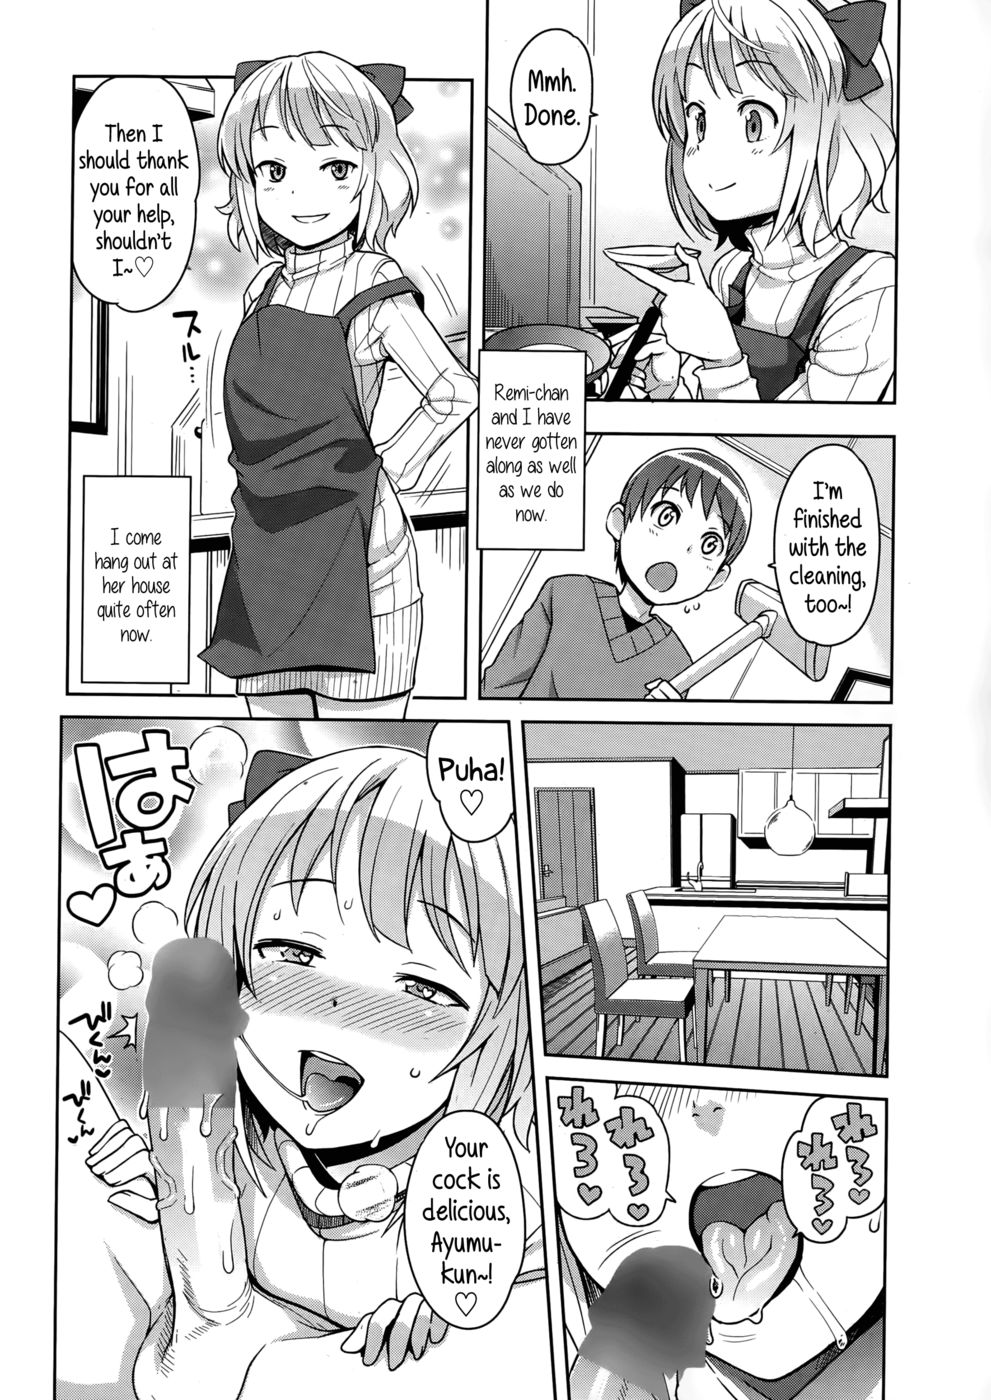 Hentai Manga Comic-Having XXX with the one I love-Chapter 2-2